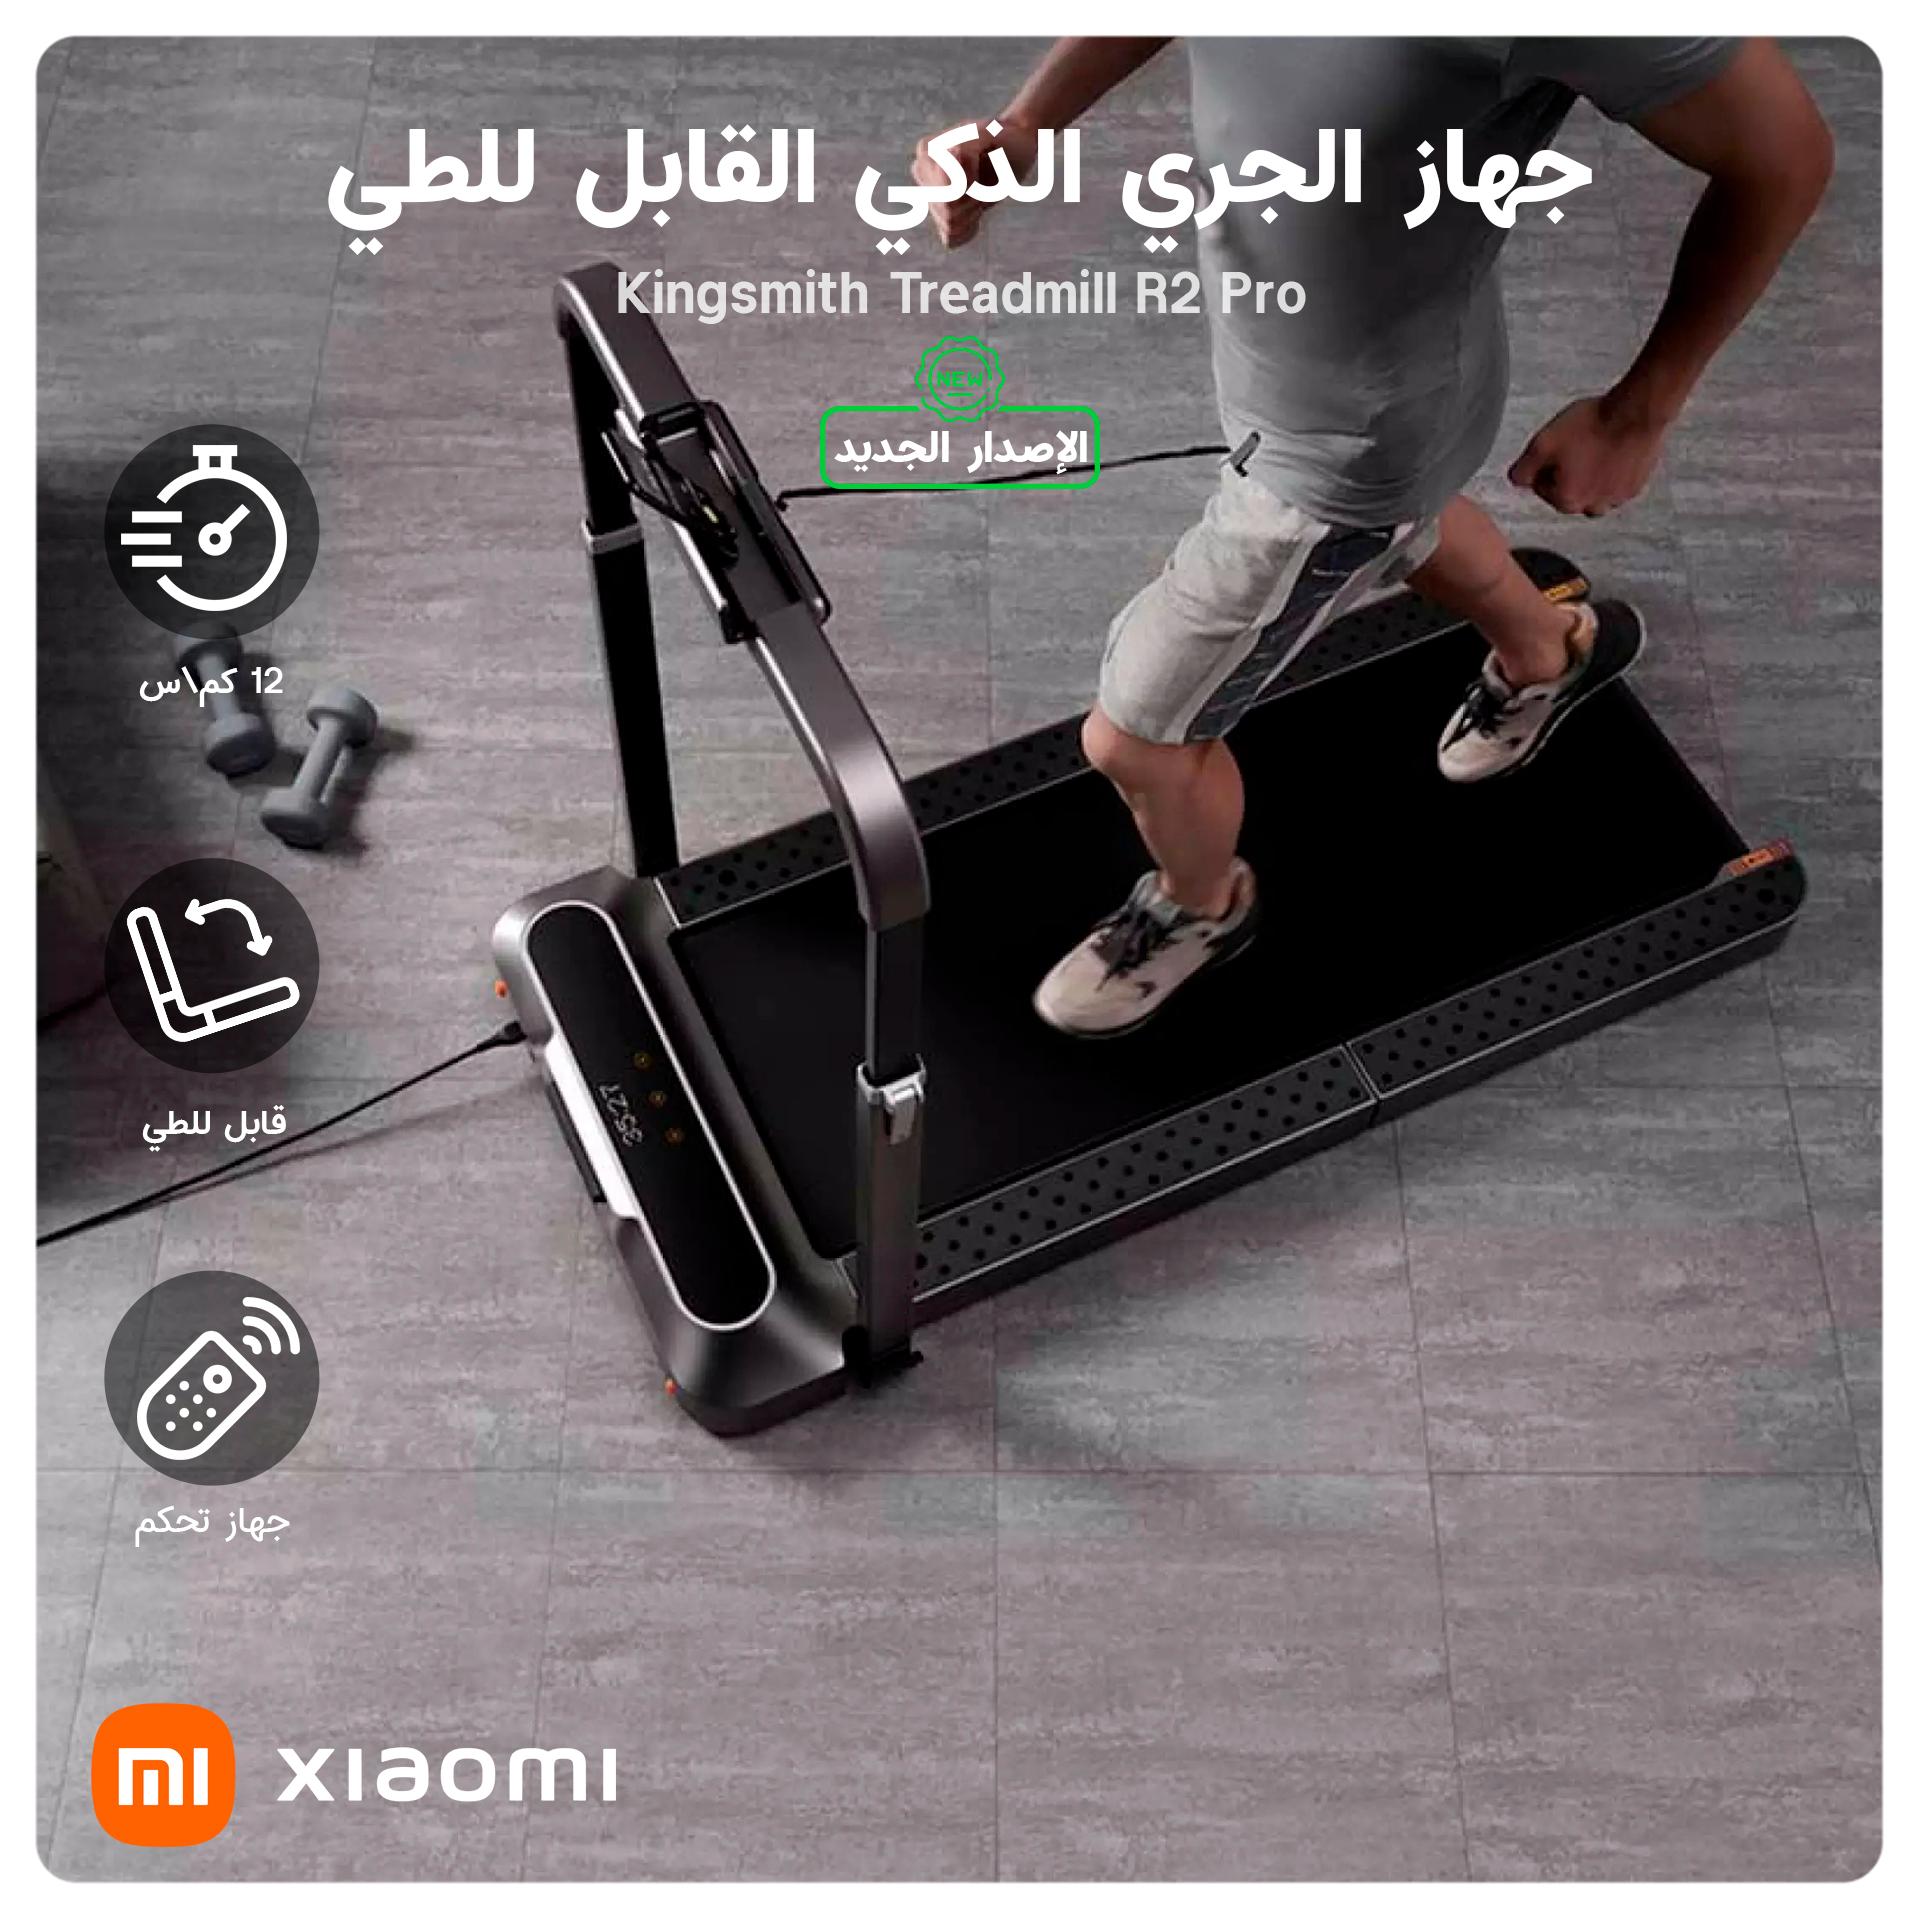 Xiaomi Kingsmith WalkingPad R2 Pro Folding Treadmill